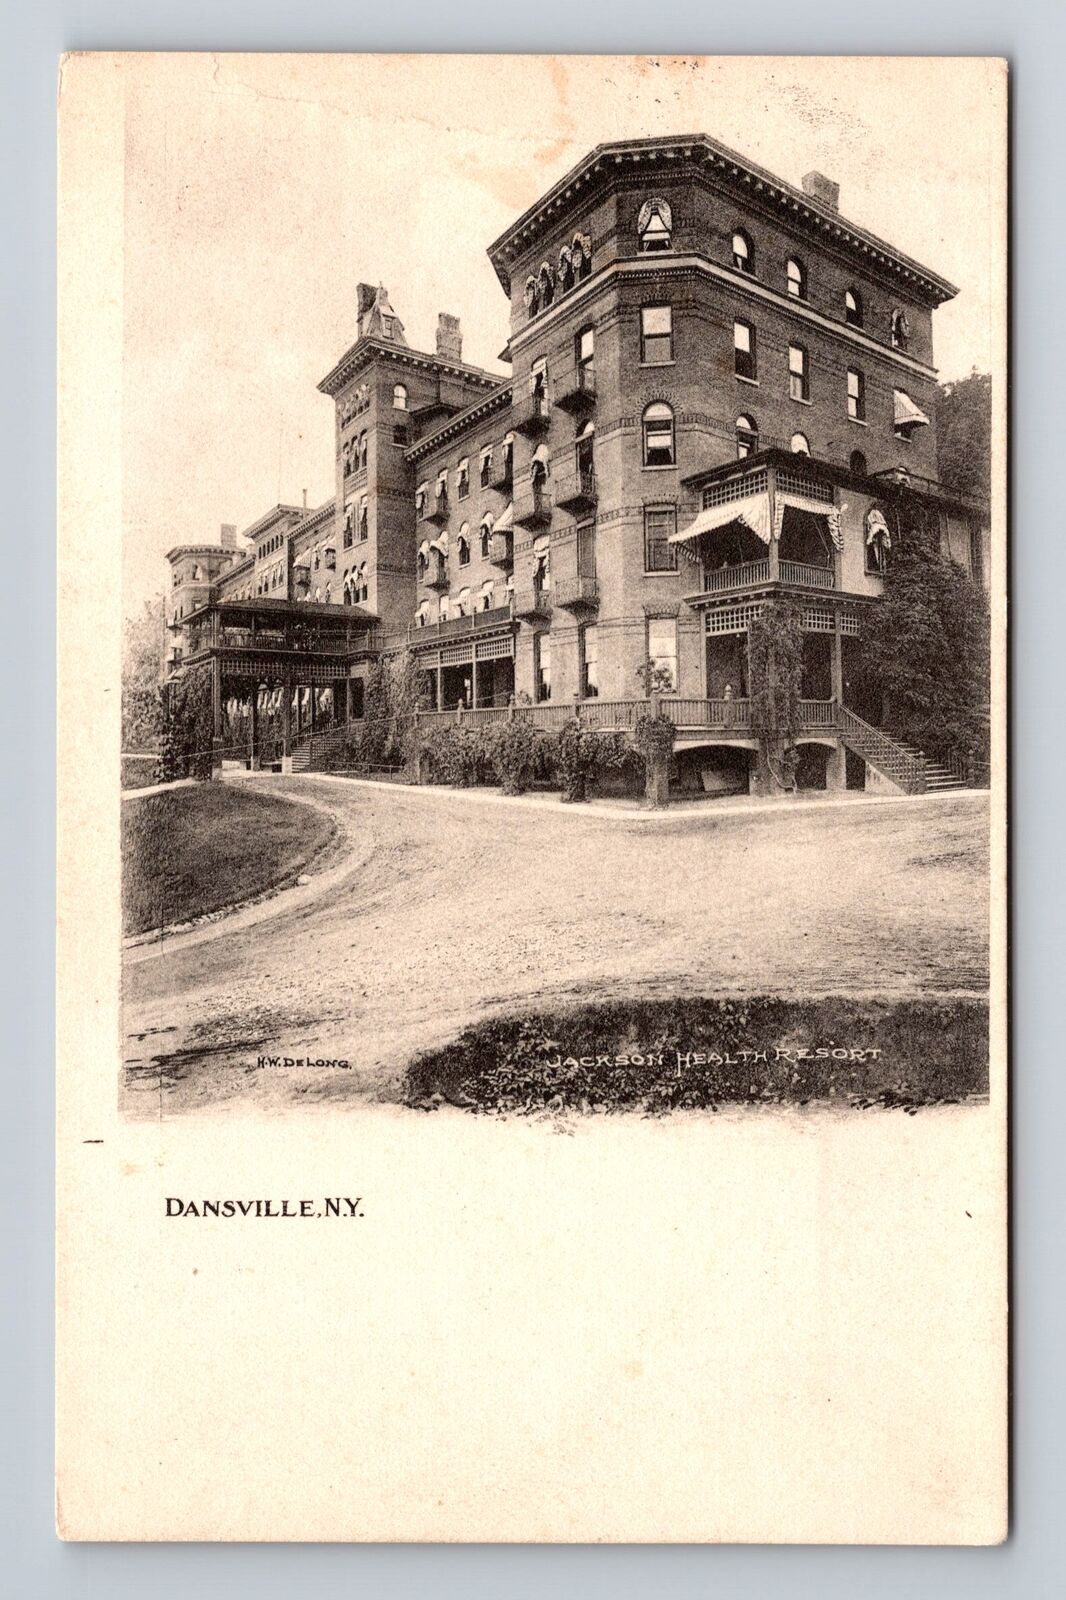 Dansville NY-New York, Jackson Health Resort, Antique, Vintage c1907 Postcard